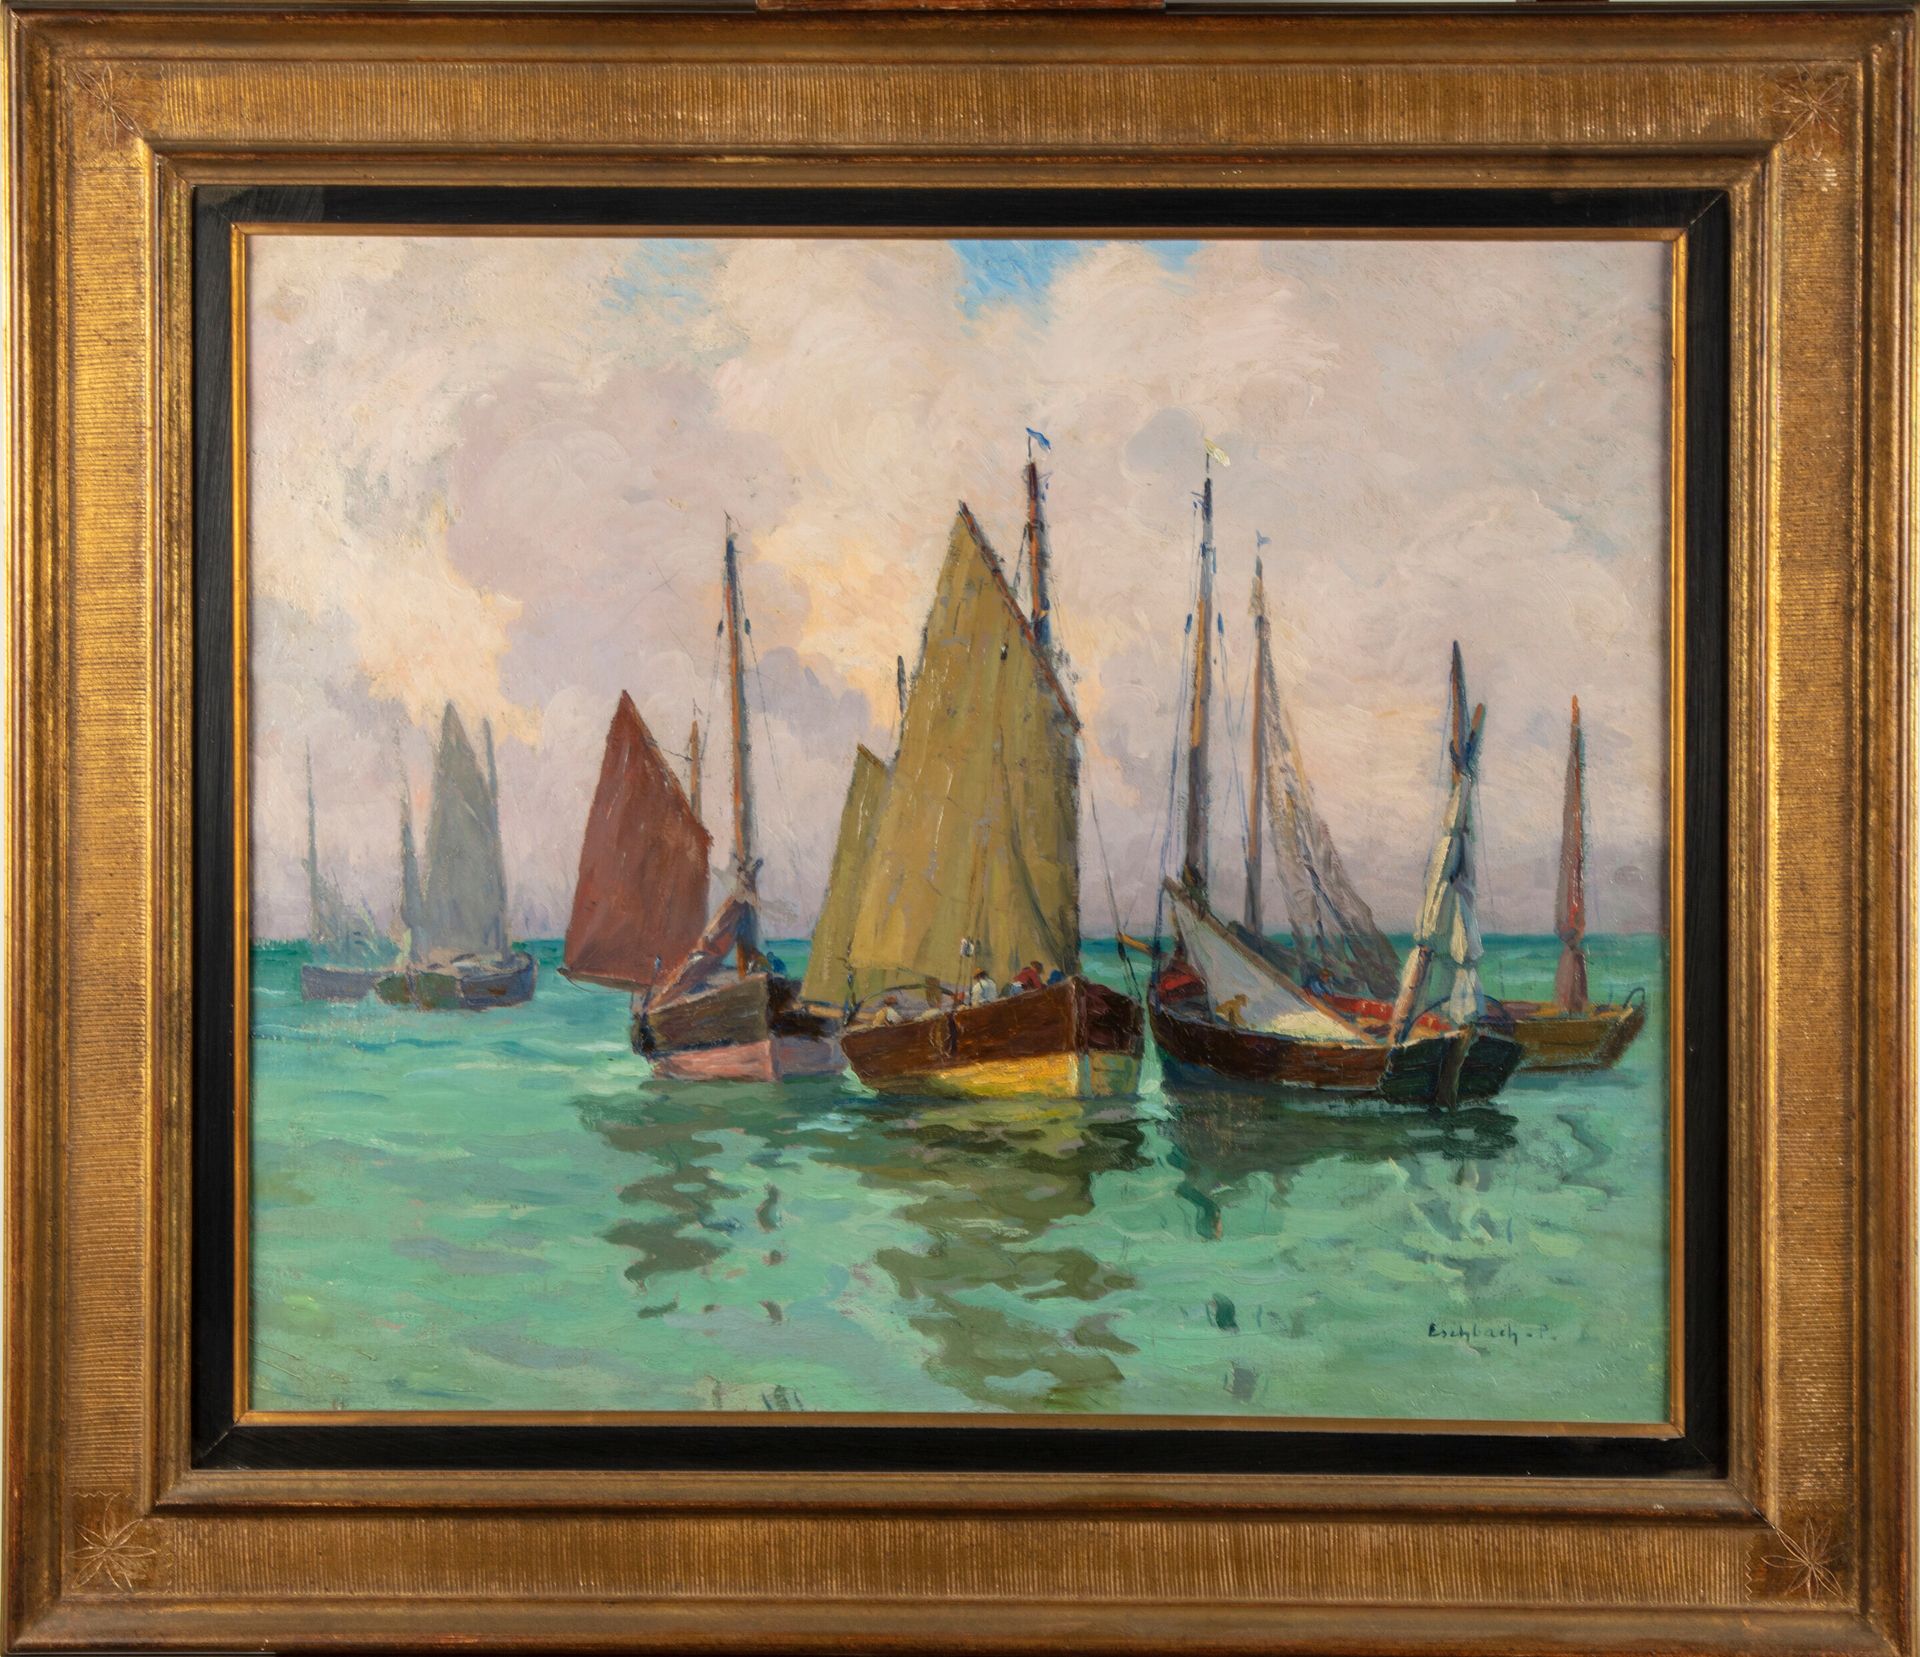 ESCHBACH 保罗-艾斯巴赫 (1881-1961)

帆船

布面油画，左下角有签名

54 x 65厘米